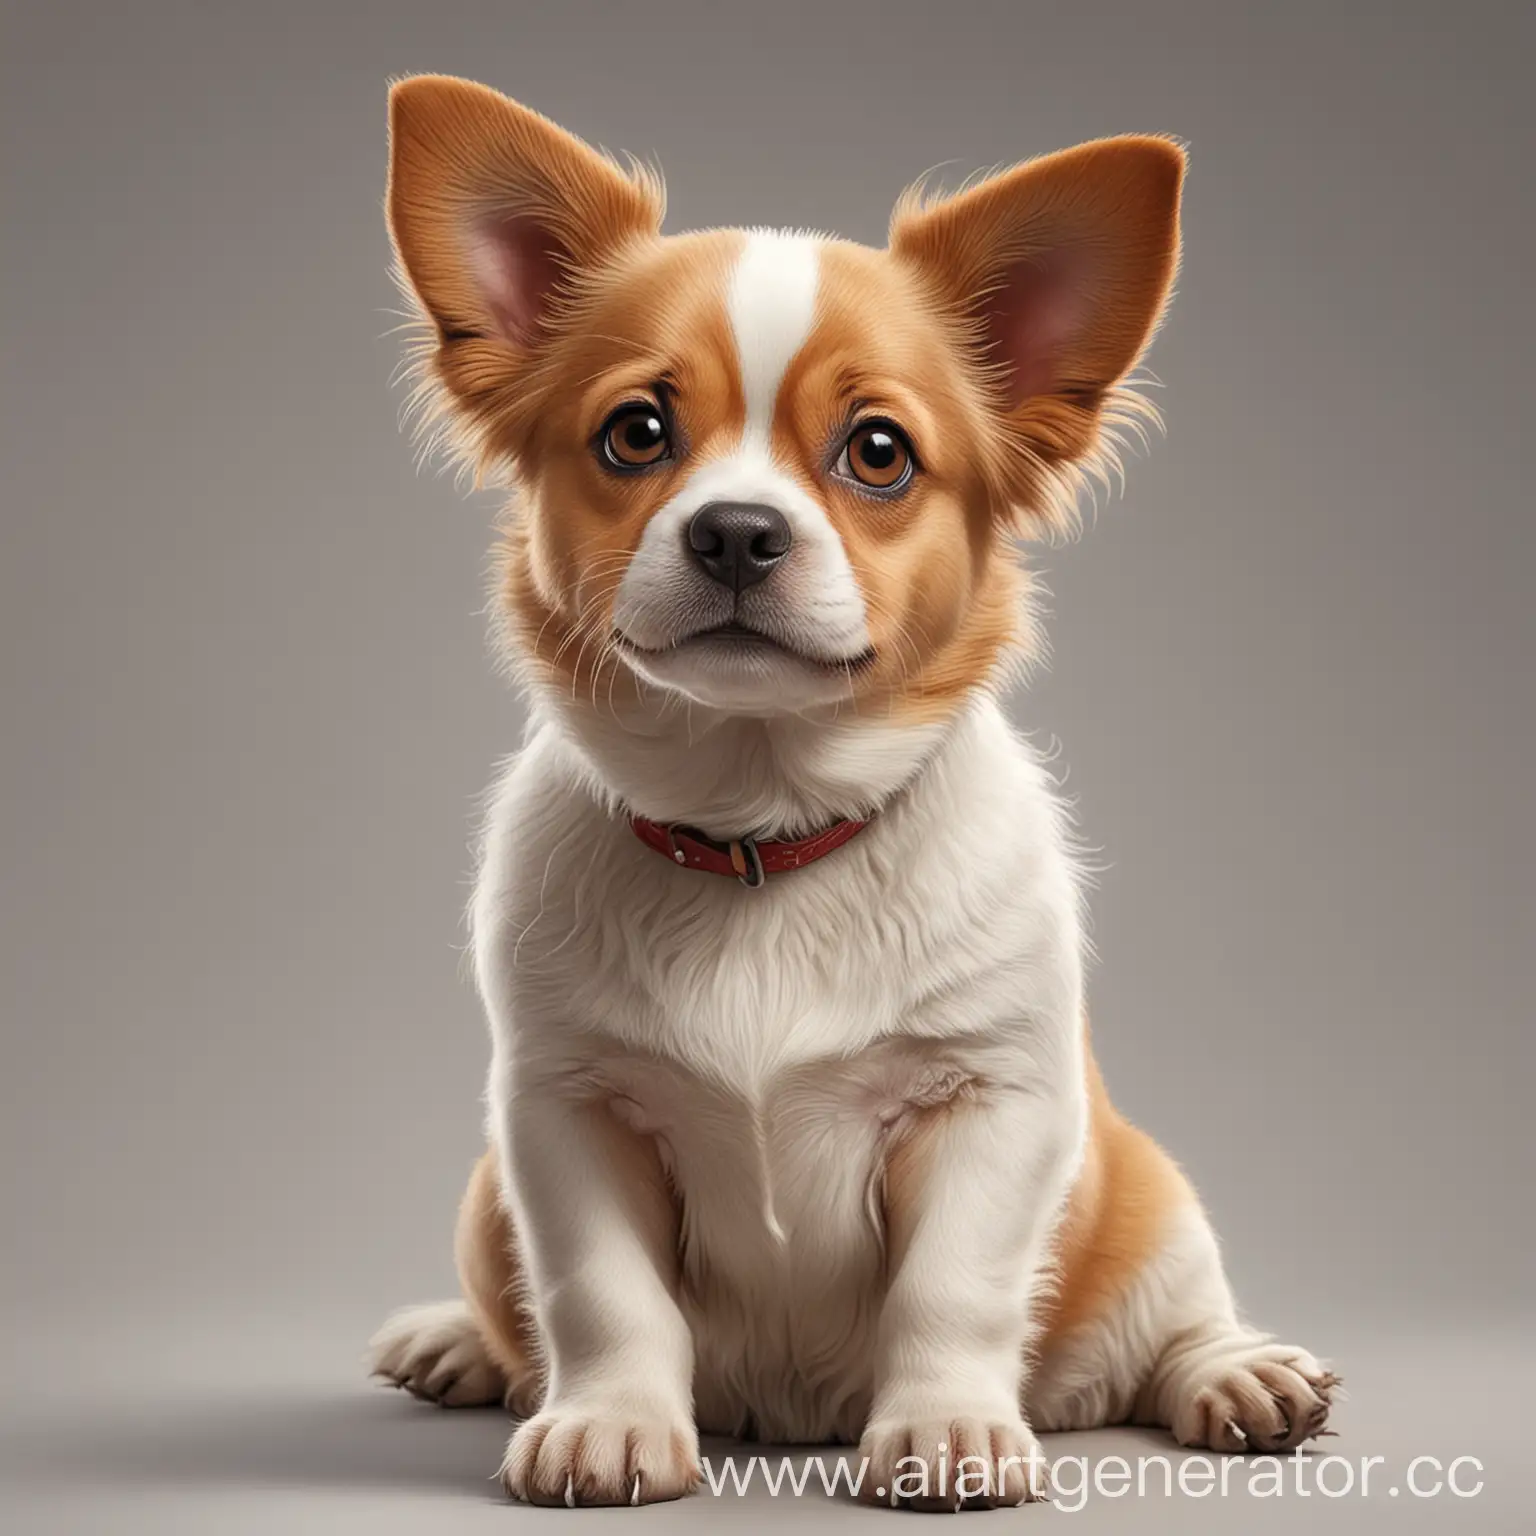 Realistic-Portrait-of-a-Cute-Dog-Sitting-and-Gazing-Ahead